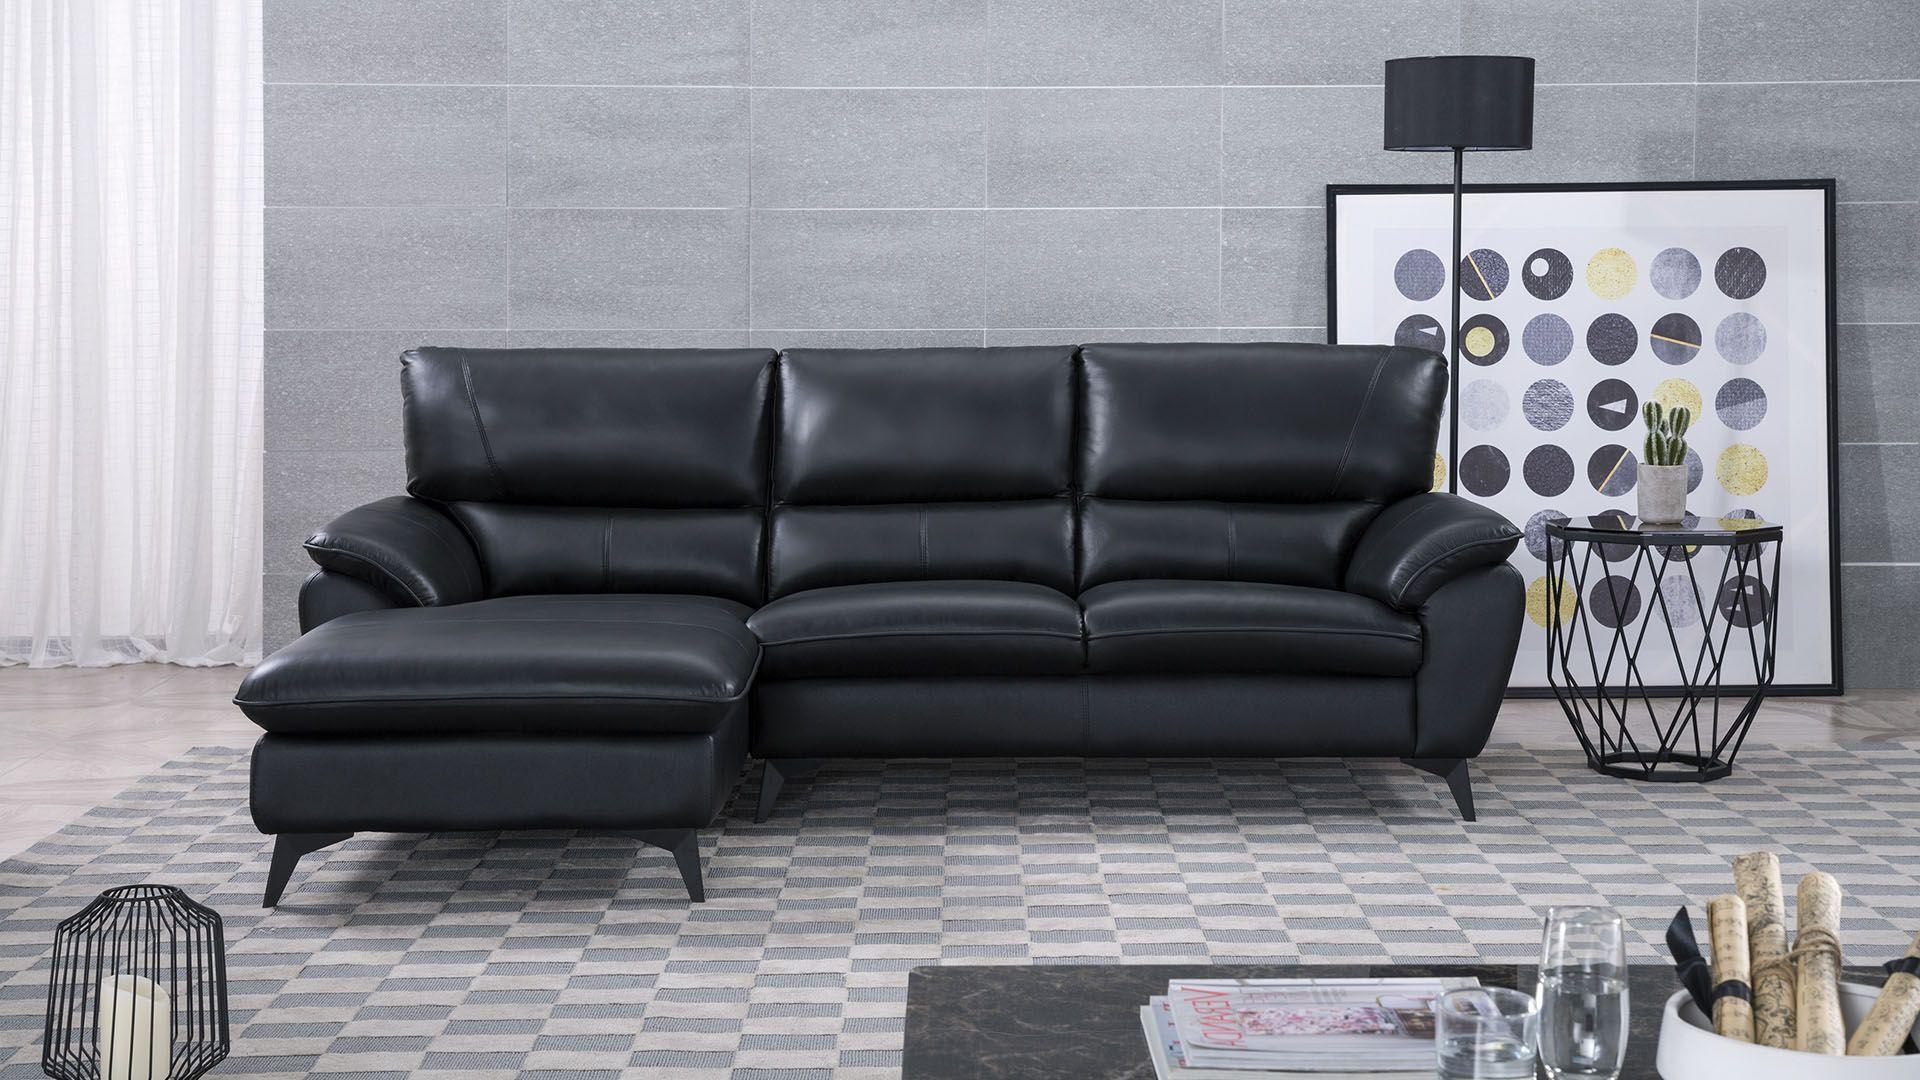 Contemporary, Modern Sectional Sofa EK-L153-BK EK-L153L-BK in Black Top grain leather